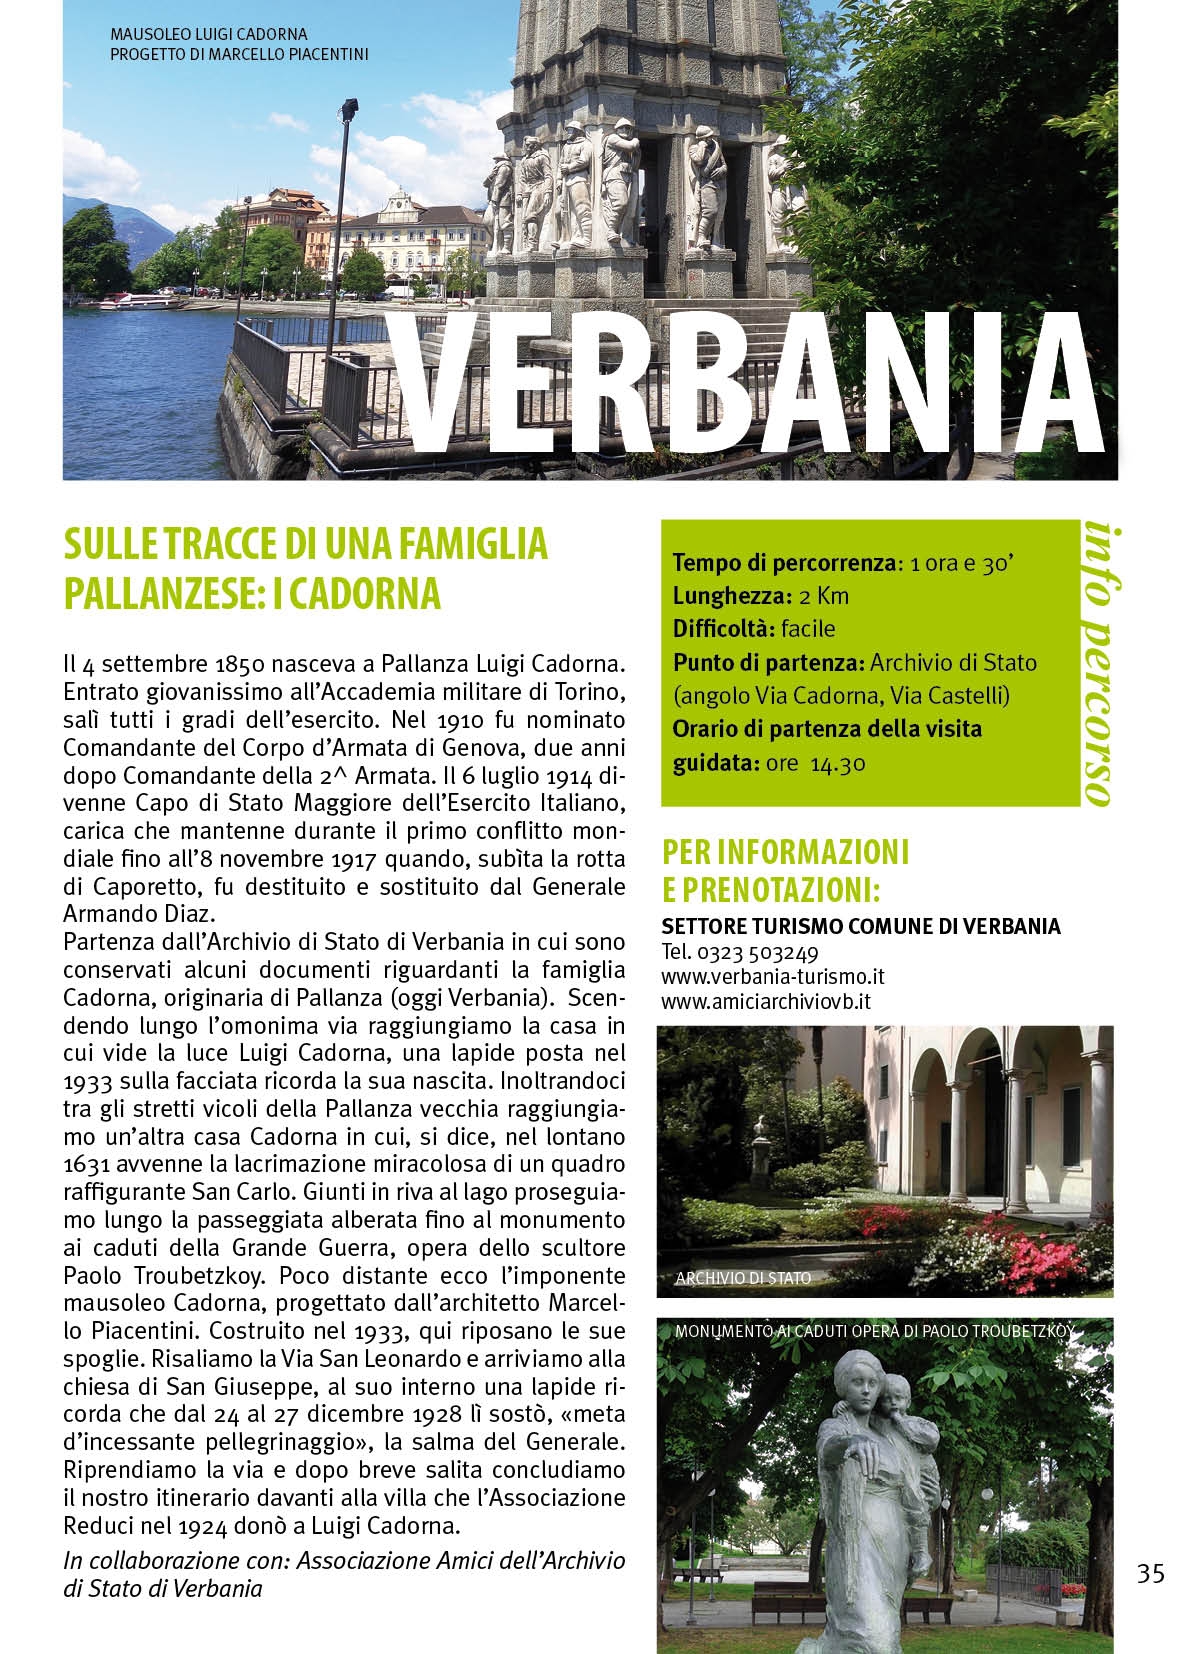 Verbania- Trekking urbano